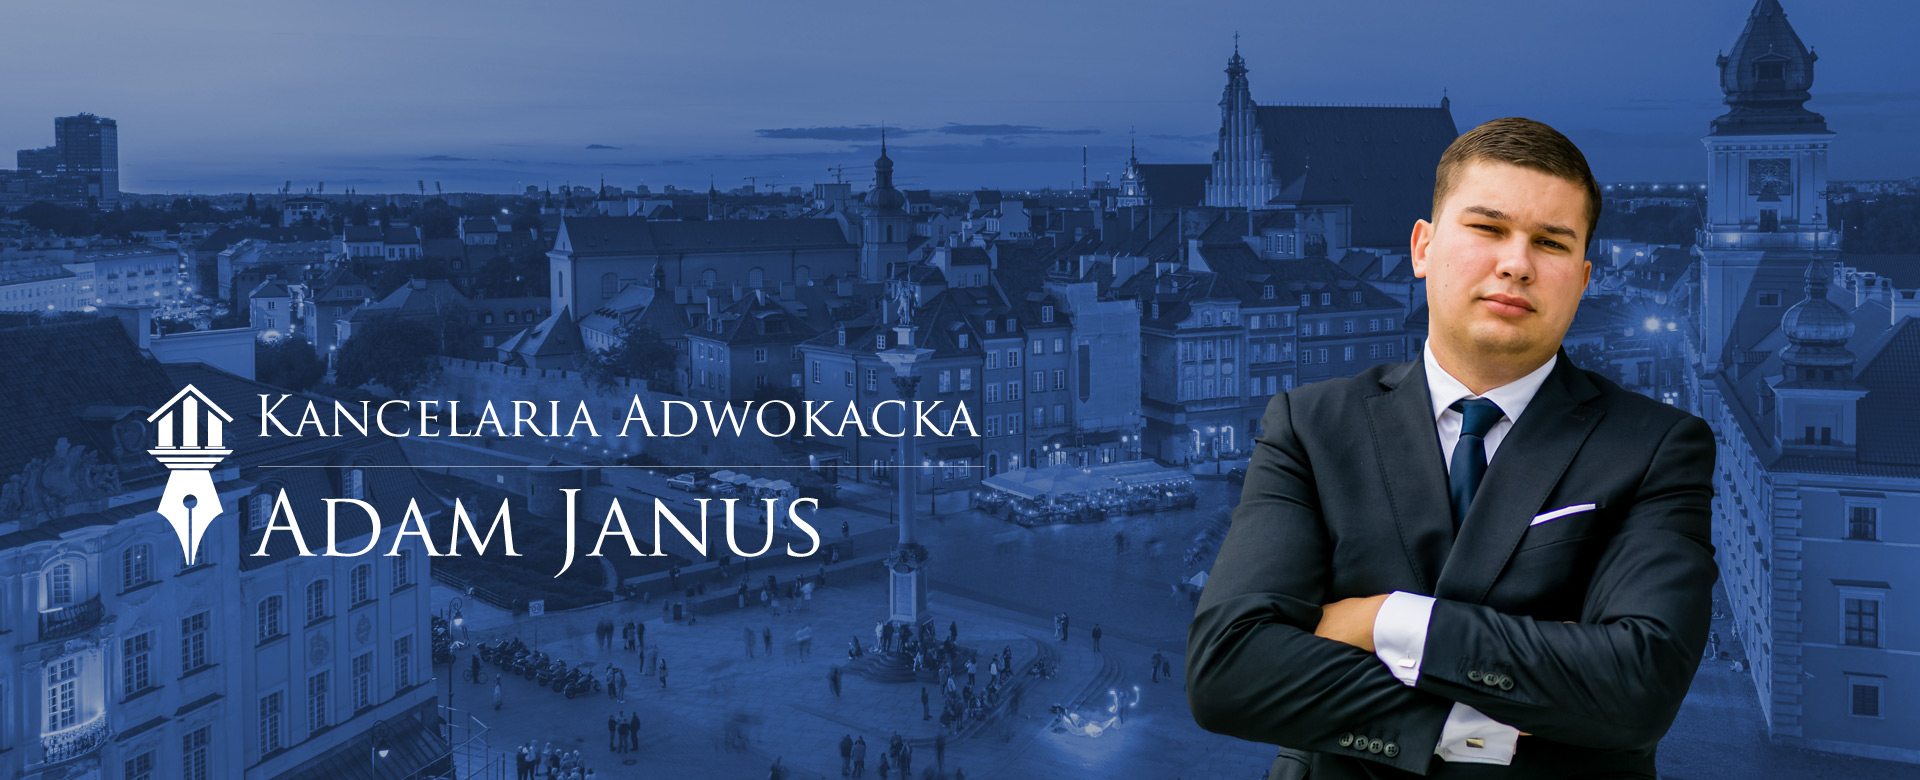 Kancelaria Adwokacka Adam Janus